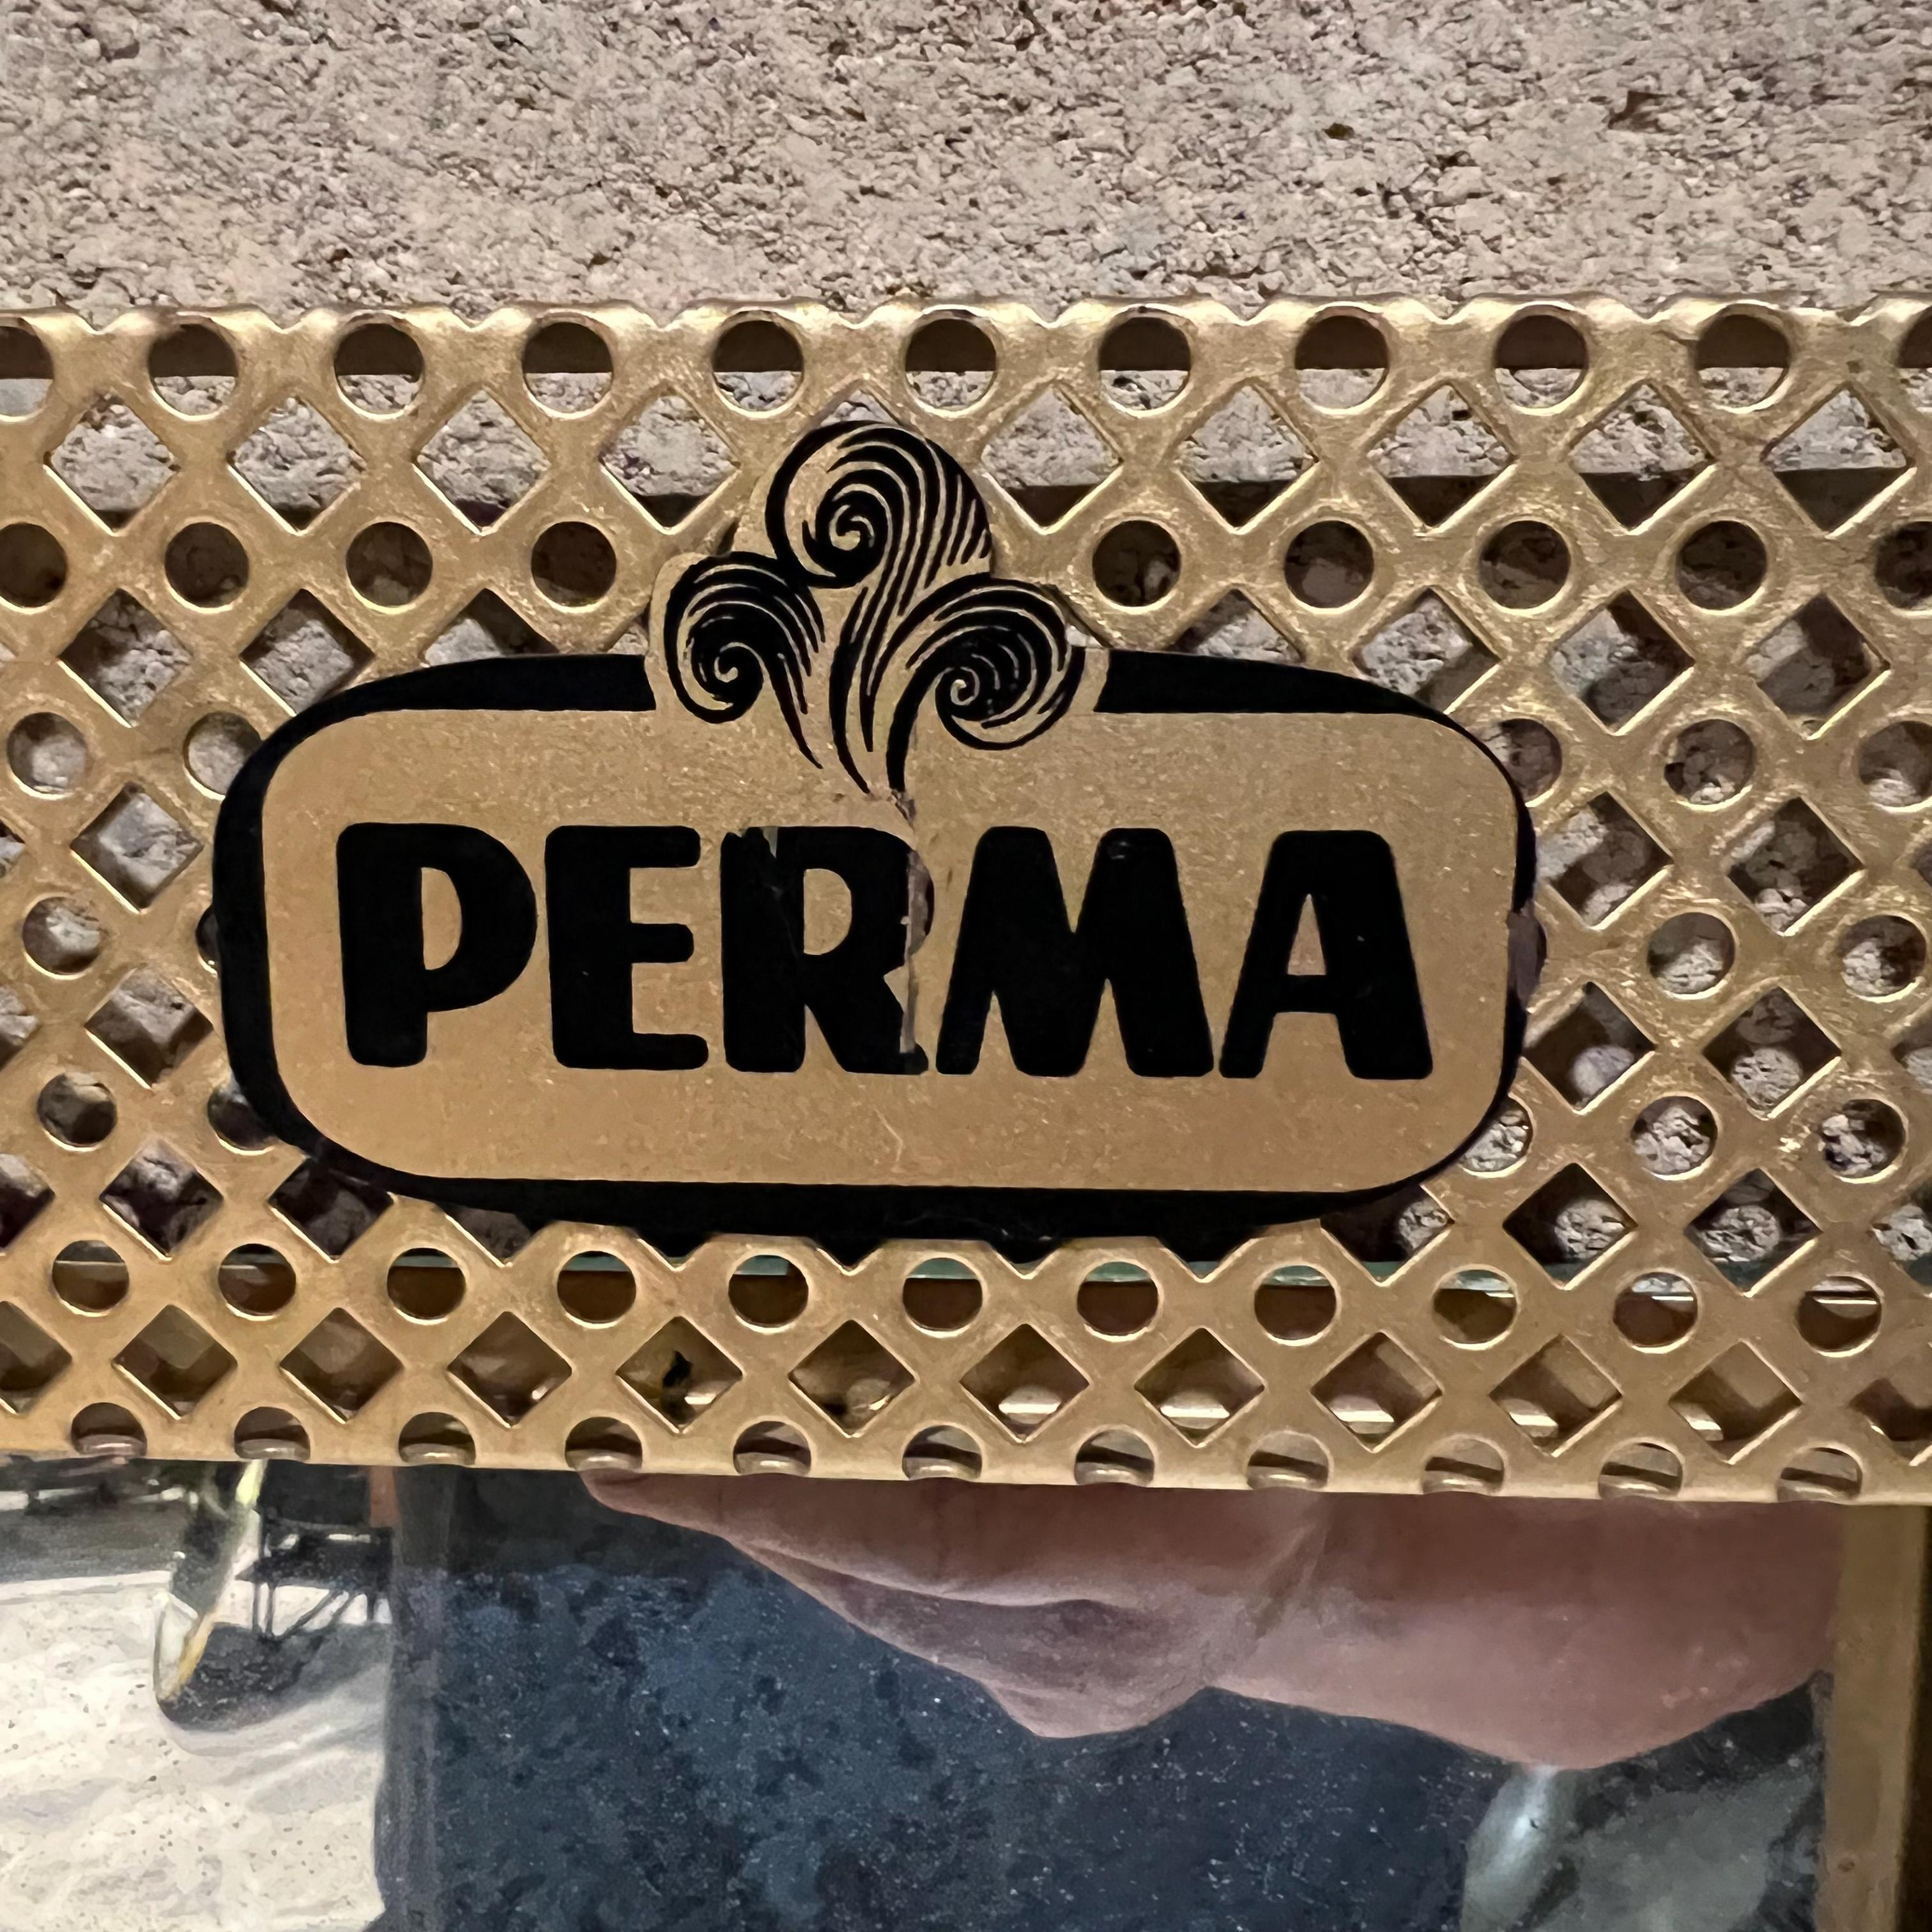 perma frame